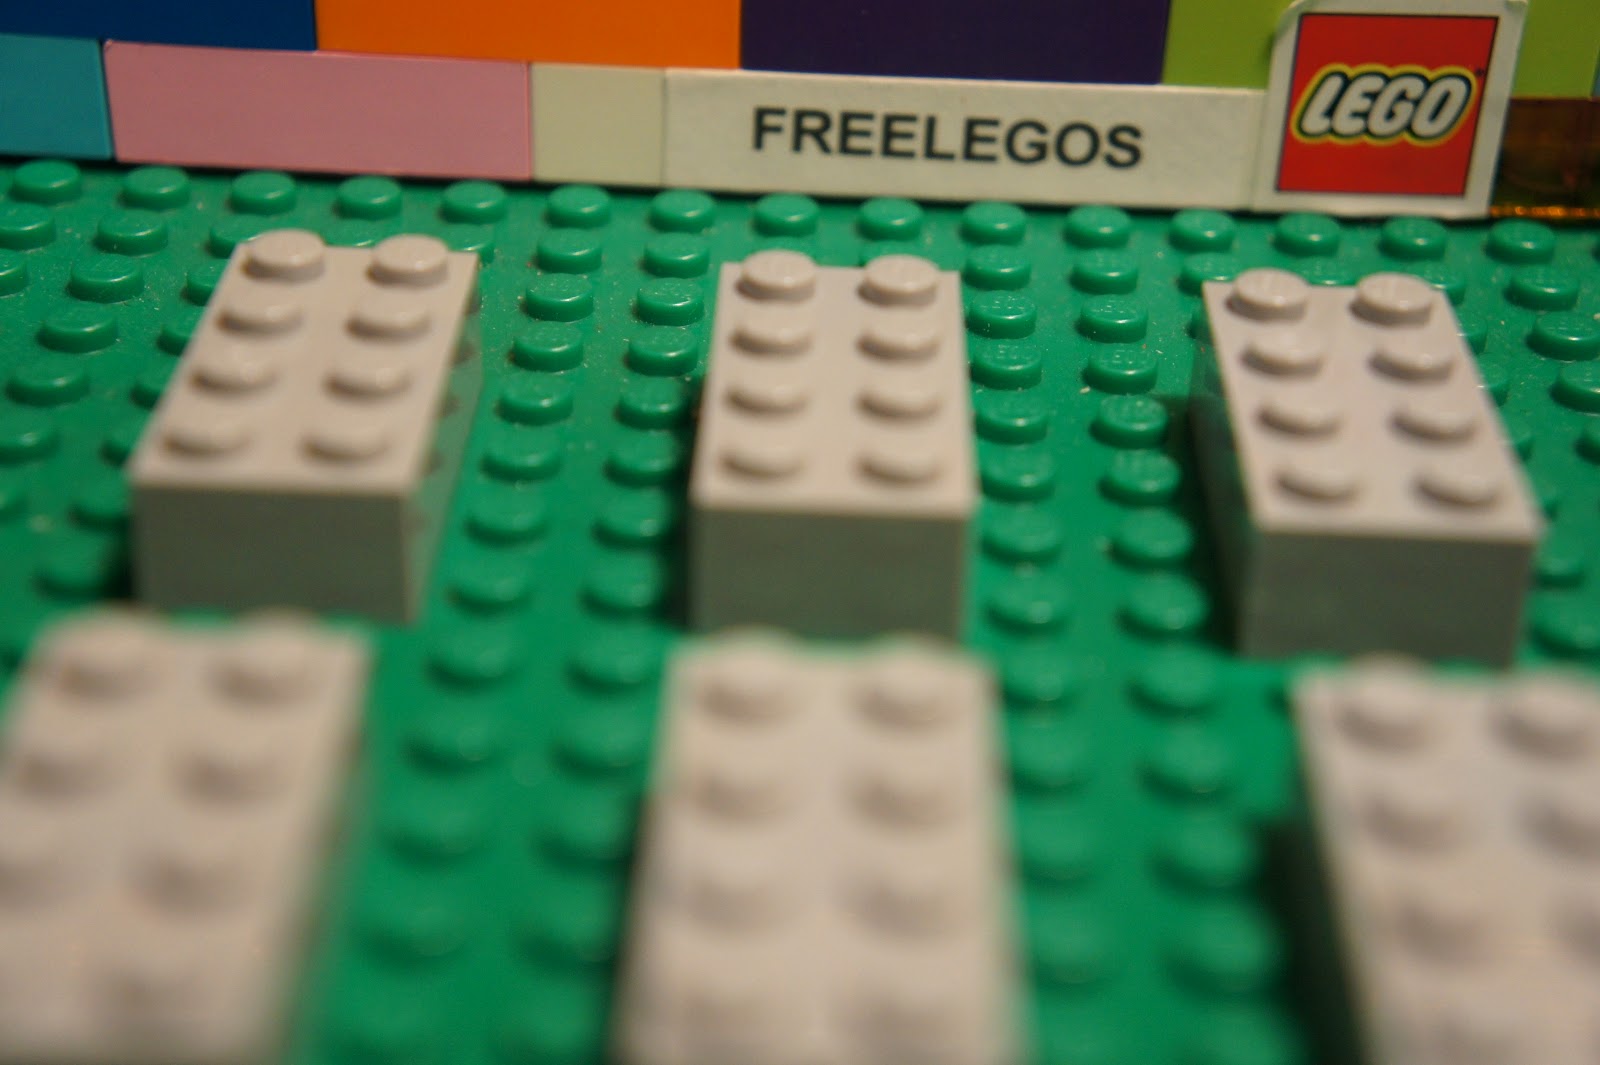 New Lego 2 x 4 Grey Gray Color 2x4 Bricks Qty x 10 Pieces